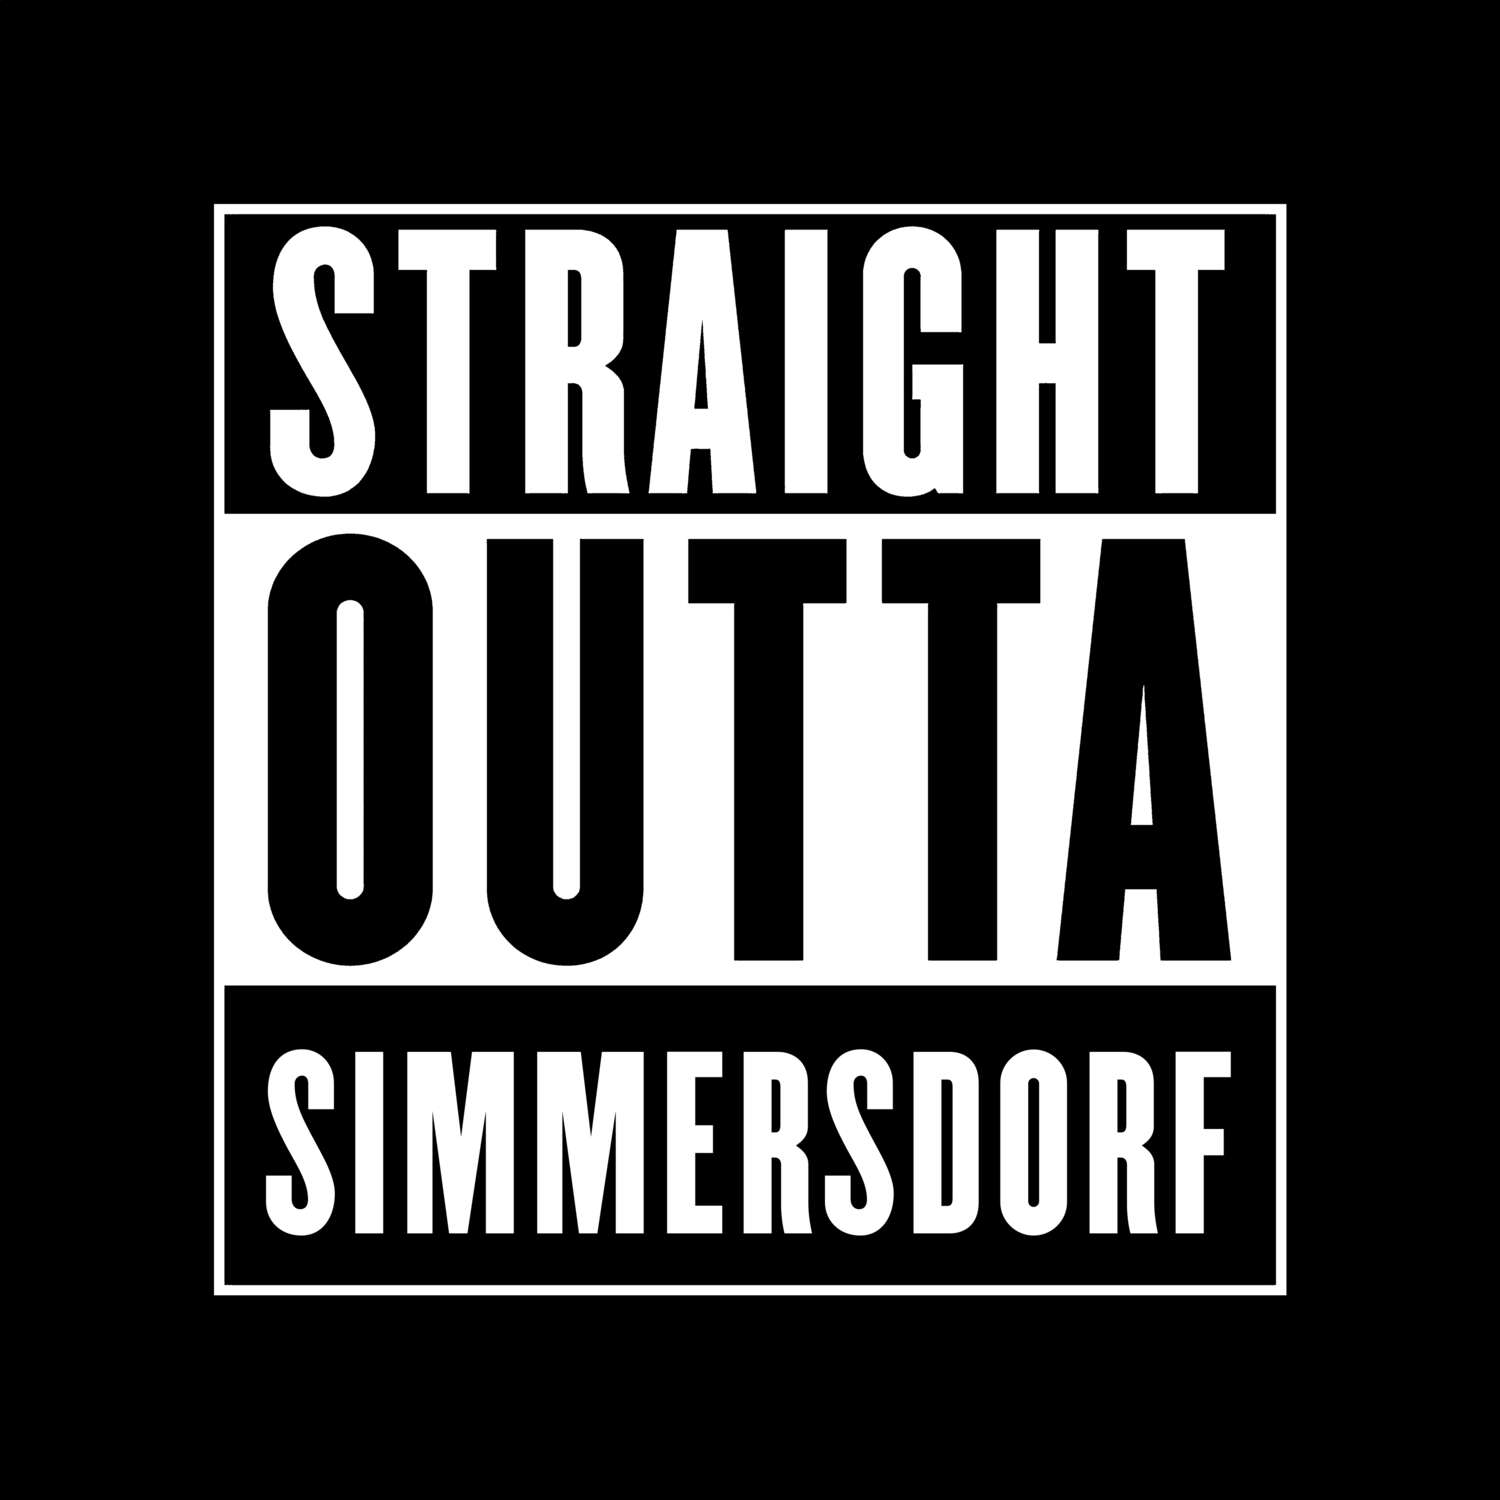 Simmersdorf T-Shirt »Straight Outta«